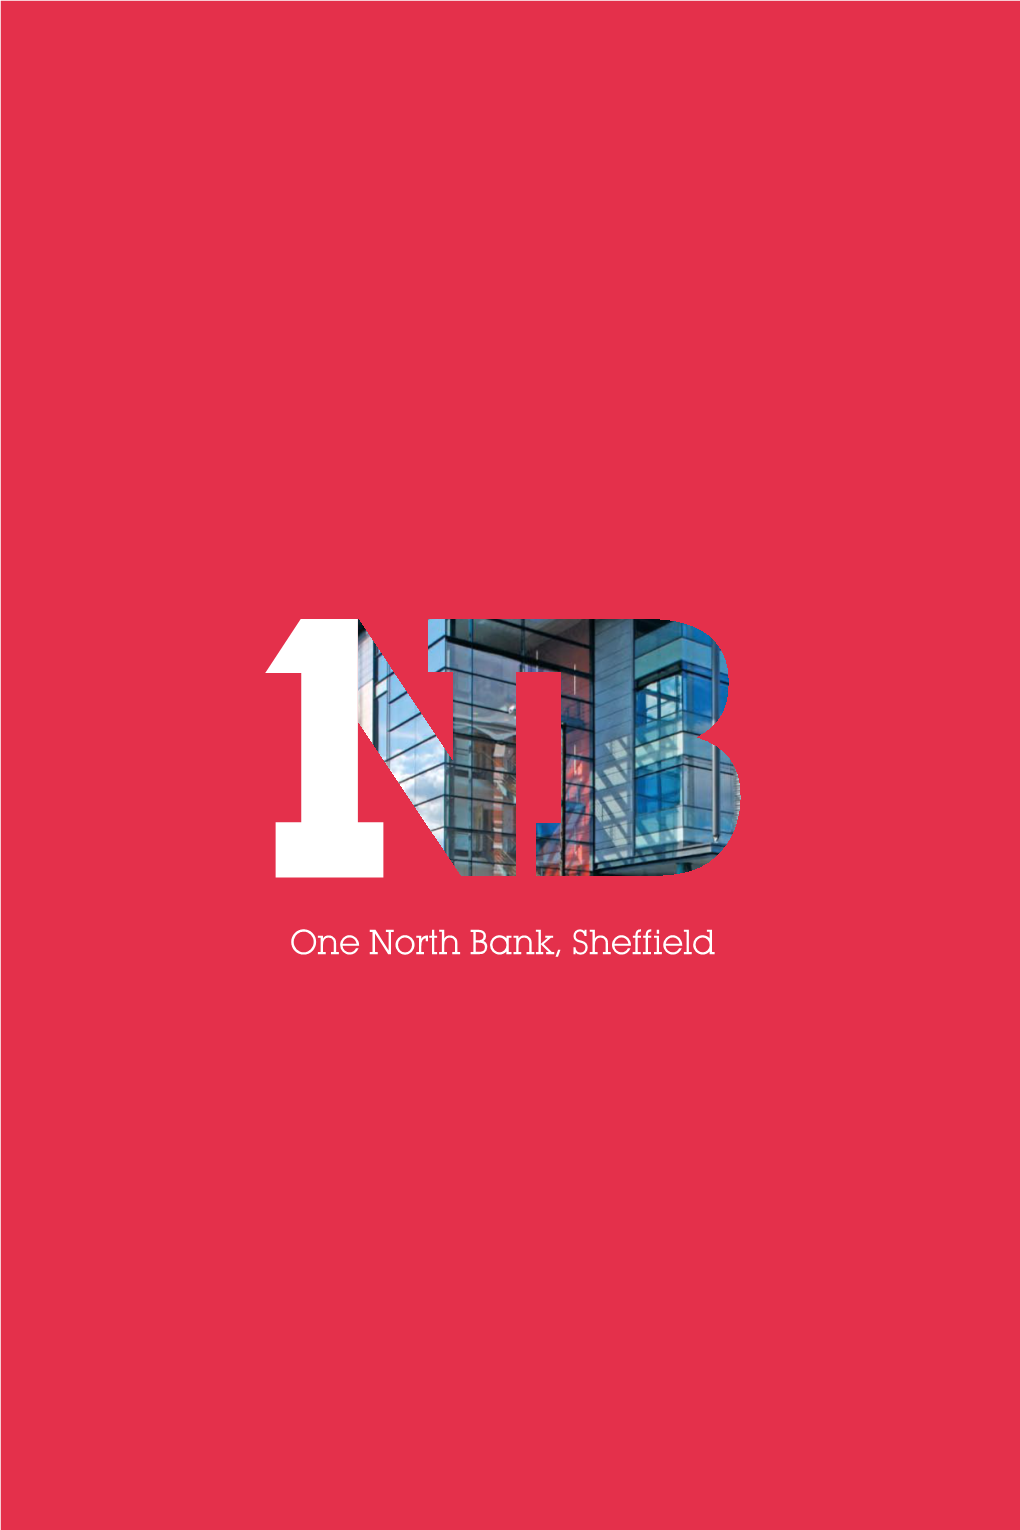 One North Bank, Sheffield